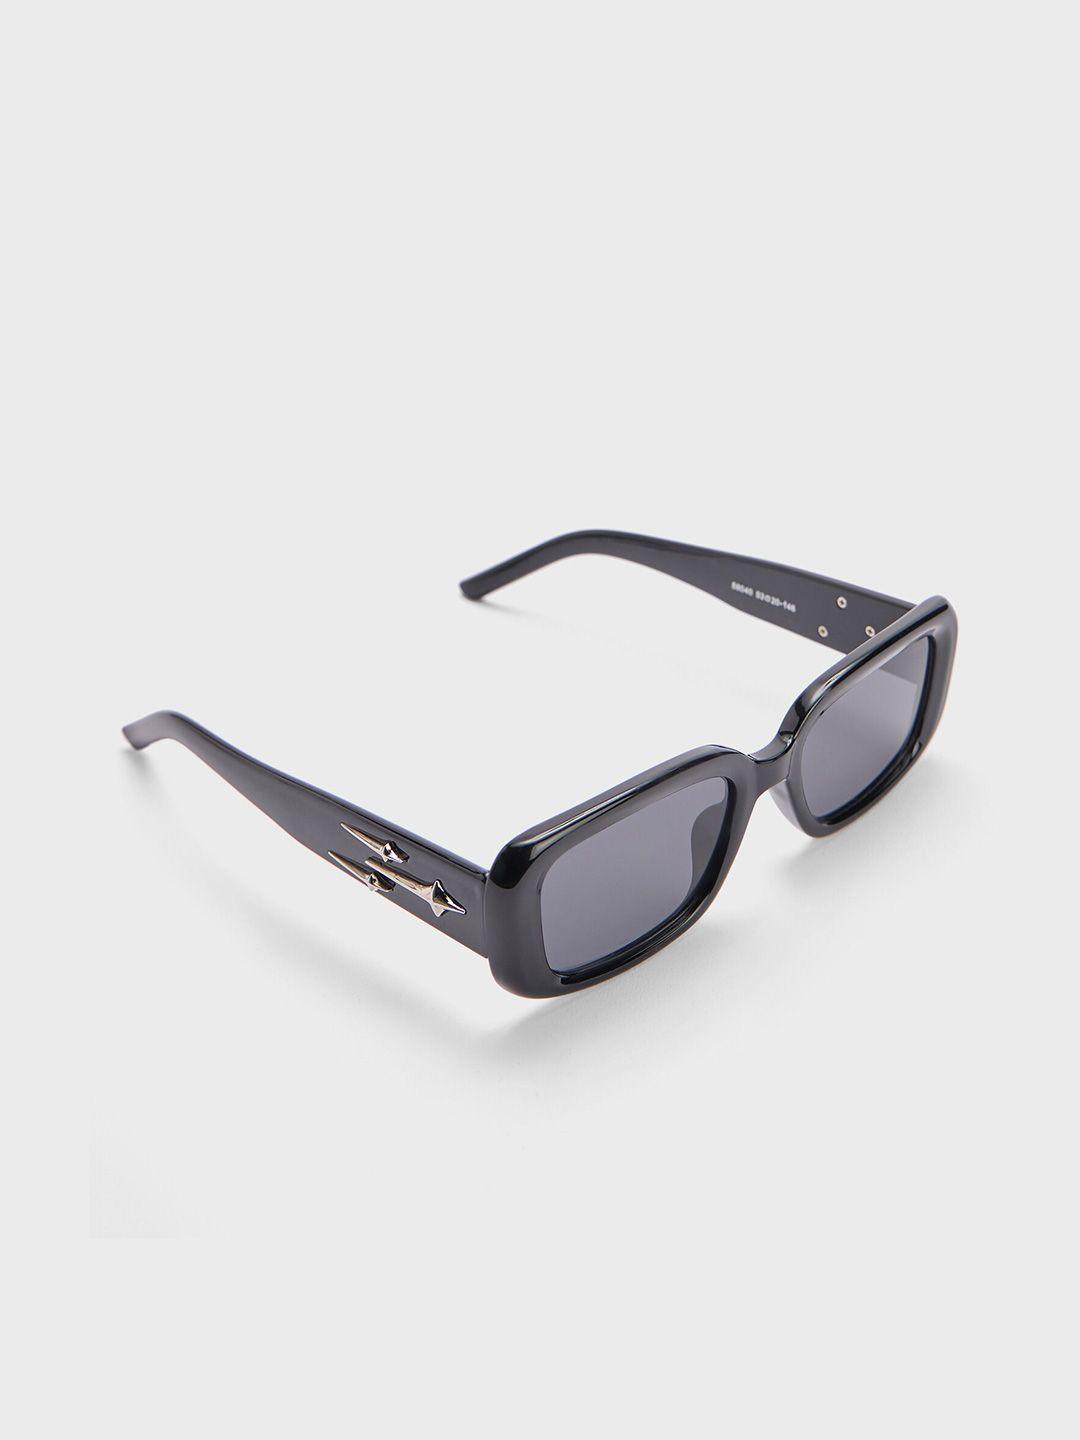 20dresses women rectangle sunglasses-sg011003